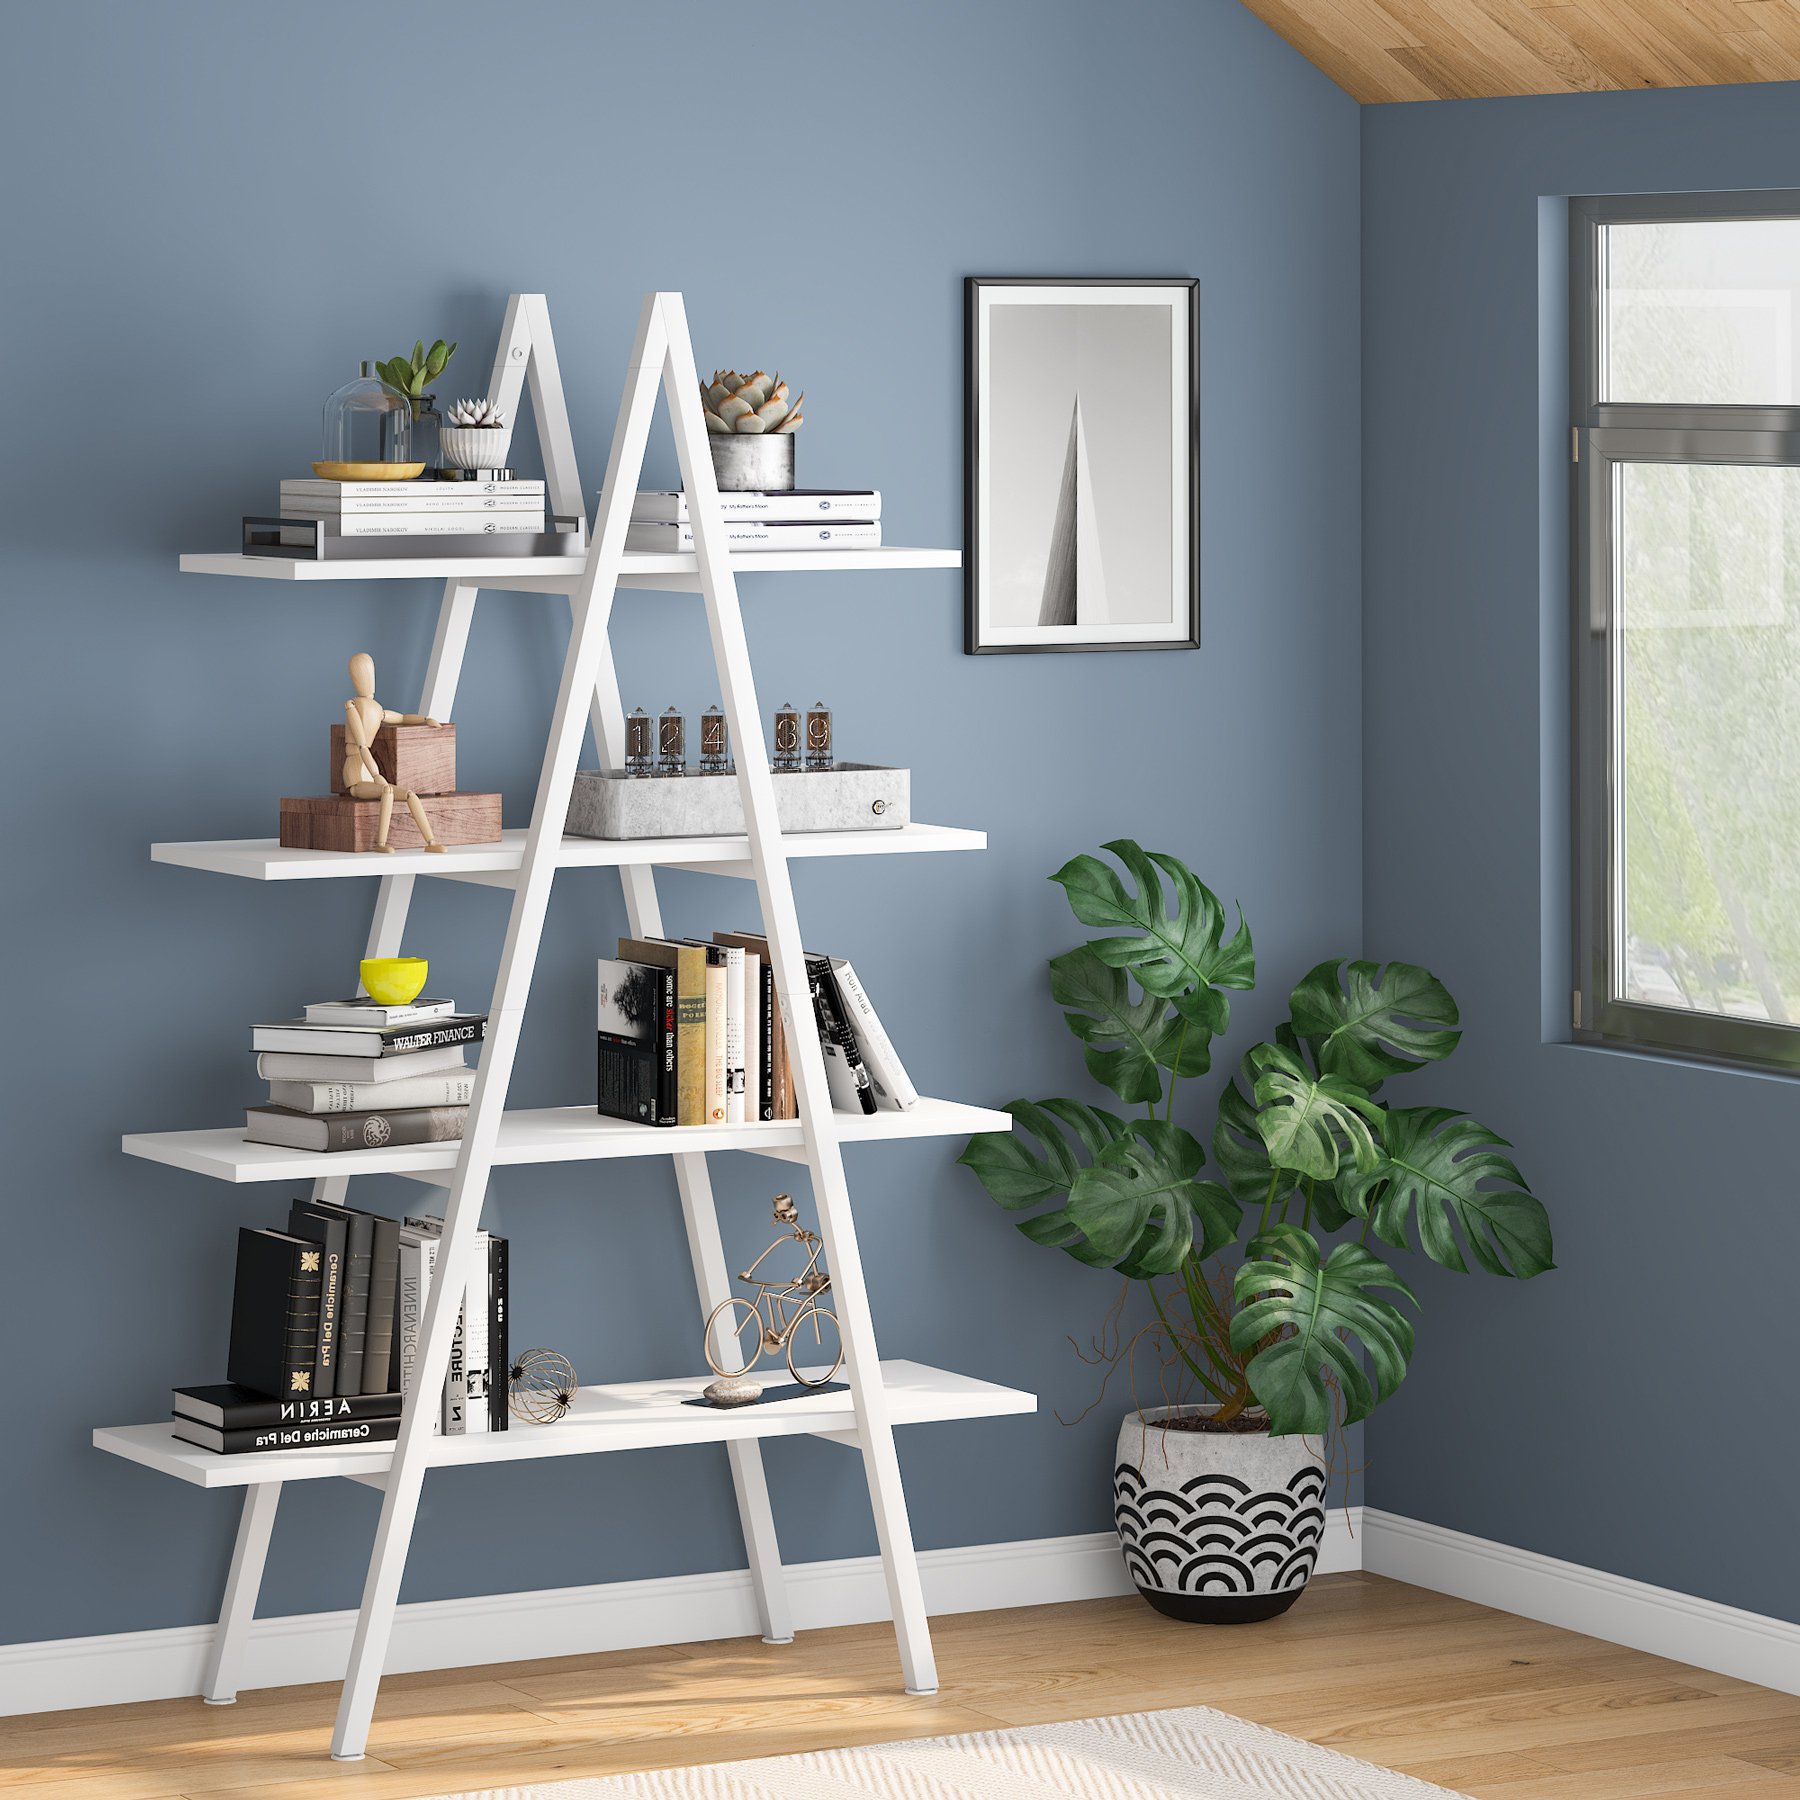 Tribesigns 4-Tier Bookshelf, A-Shaped Bookcase 4 Shelves Industrial Ladder Shelf Open Display Shelves Book Storage Organizer - White